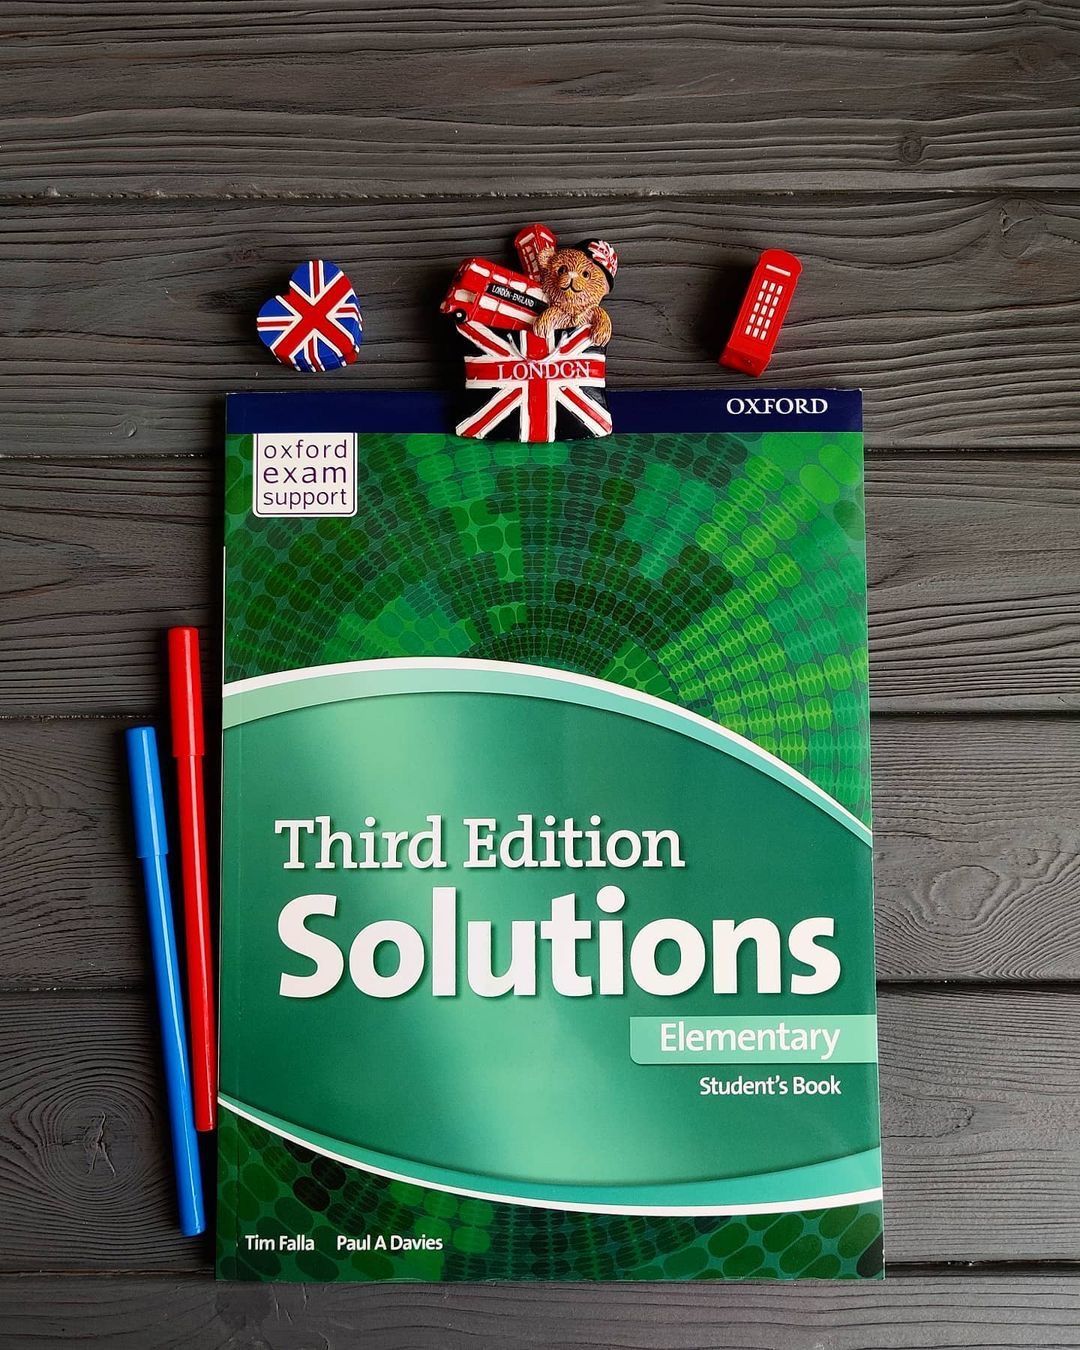 Solution elementary students book 3. Solutions учебник. Учебник Солюшенс элементари. Solution Elementary students book 3 Edition. Third Edition solutions Elementary student's book.